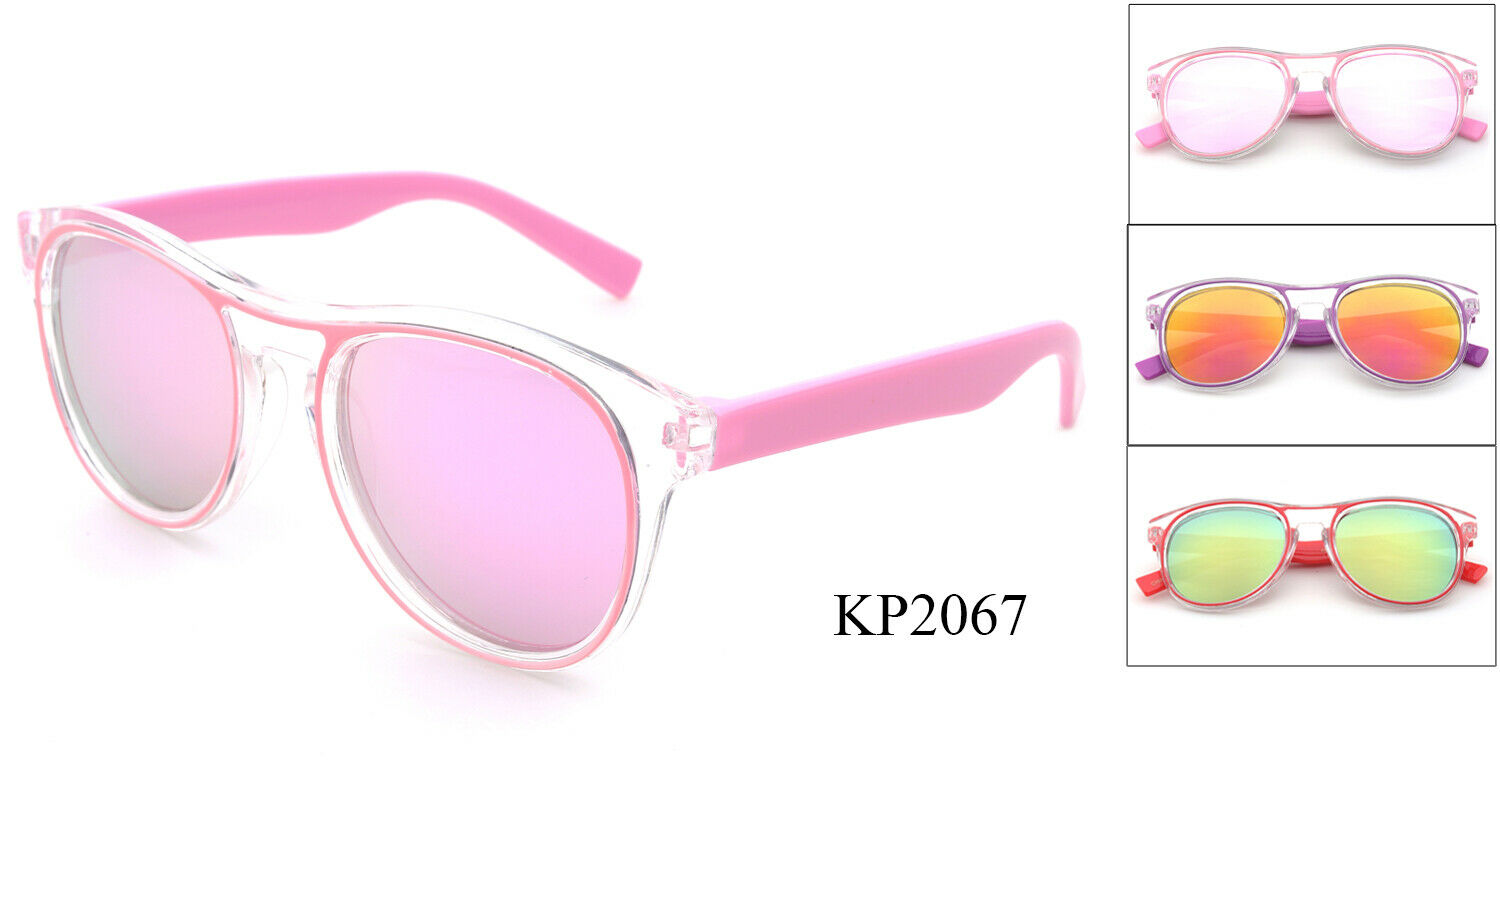 Kids Sunglasses Clear Frame Classic Boys Girls Eywear Two Tone Lead Free UV 100%